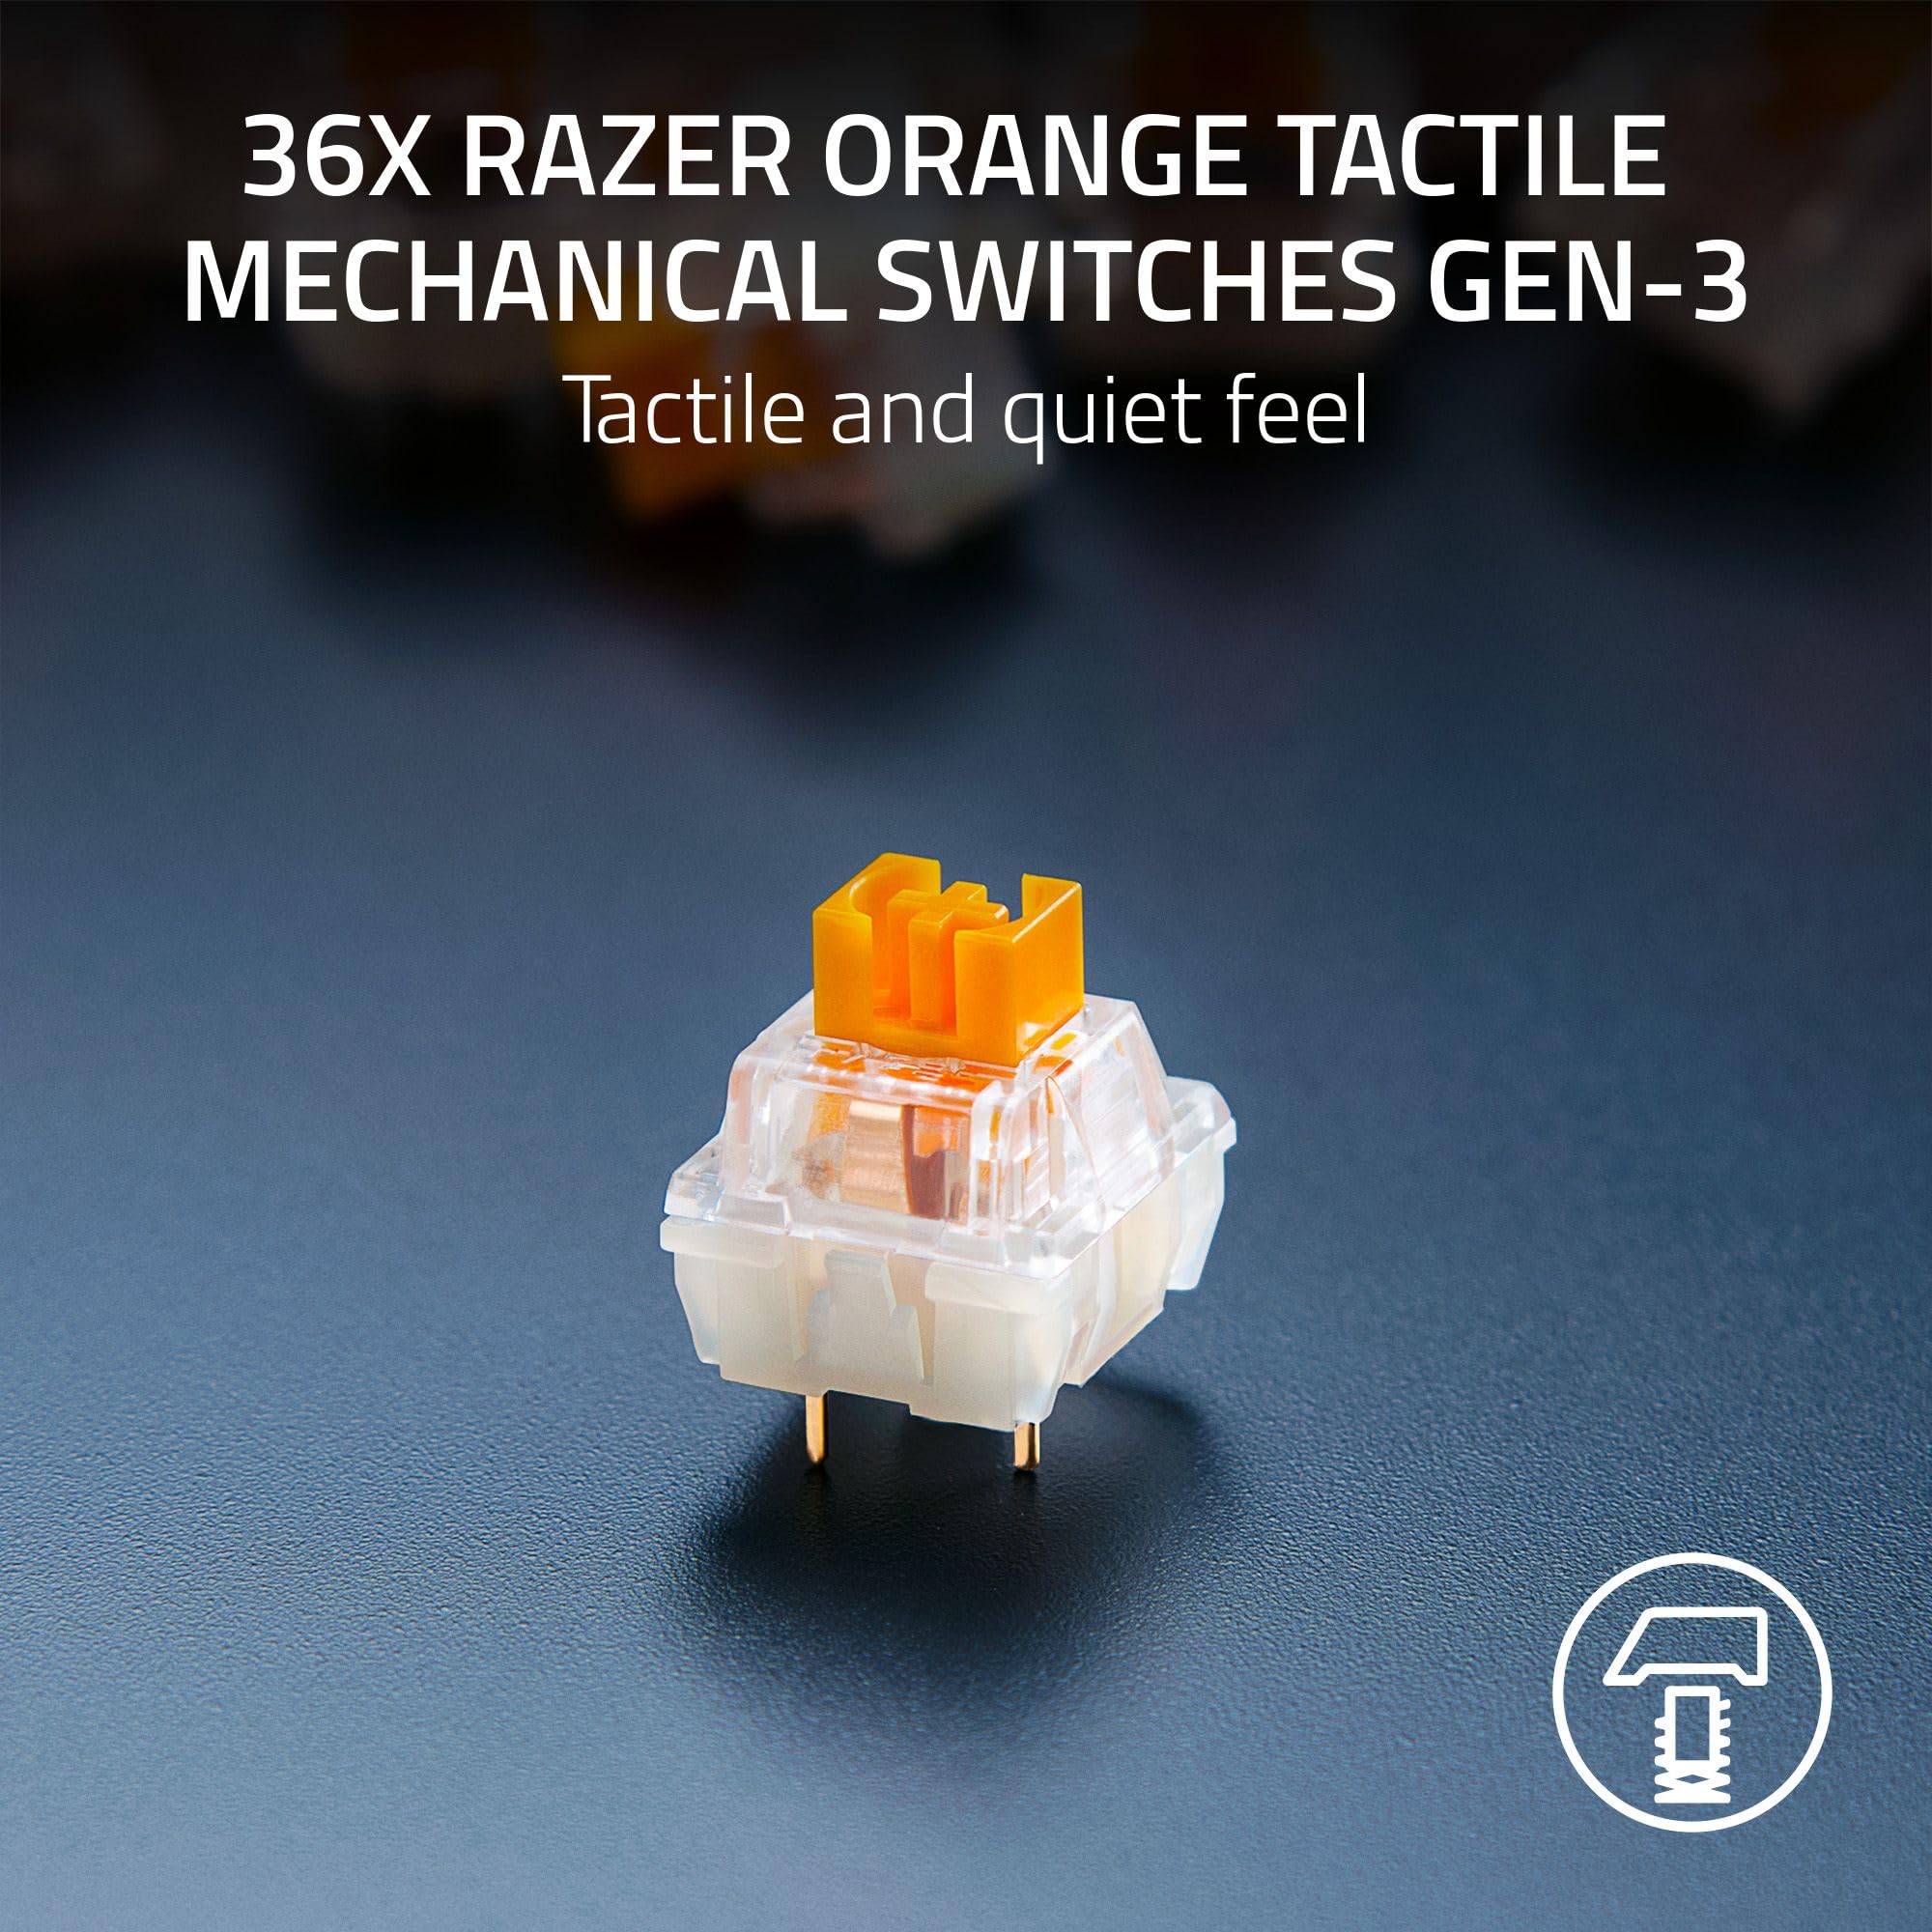 Razer Mechanical Switches Pack – Orange Tactile Switch